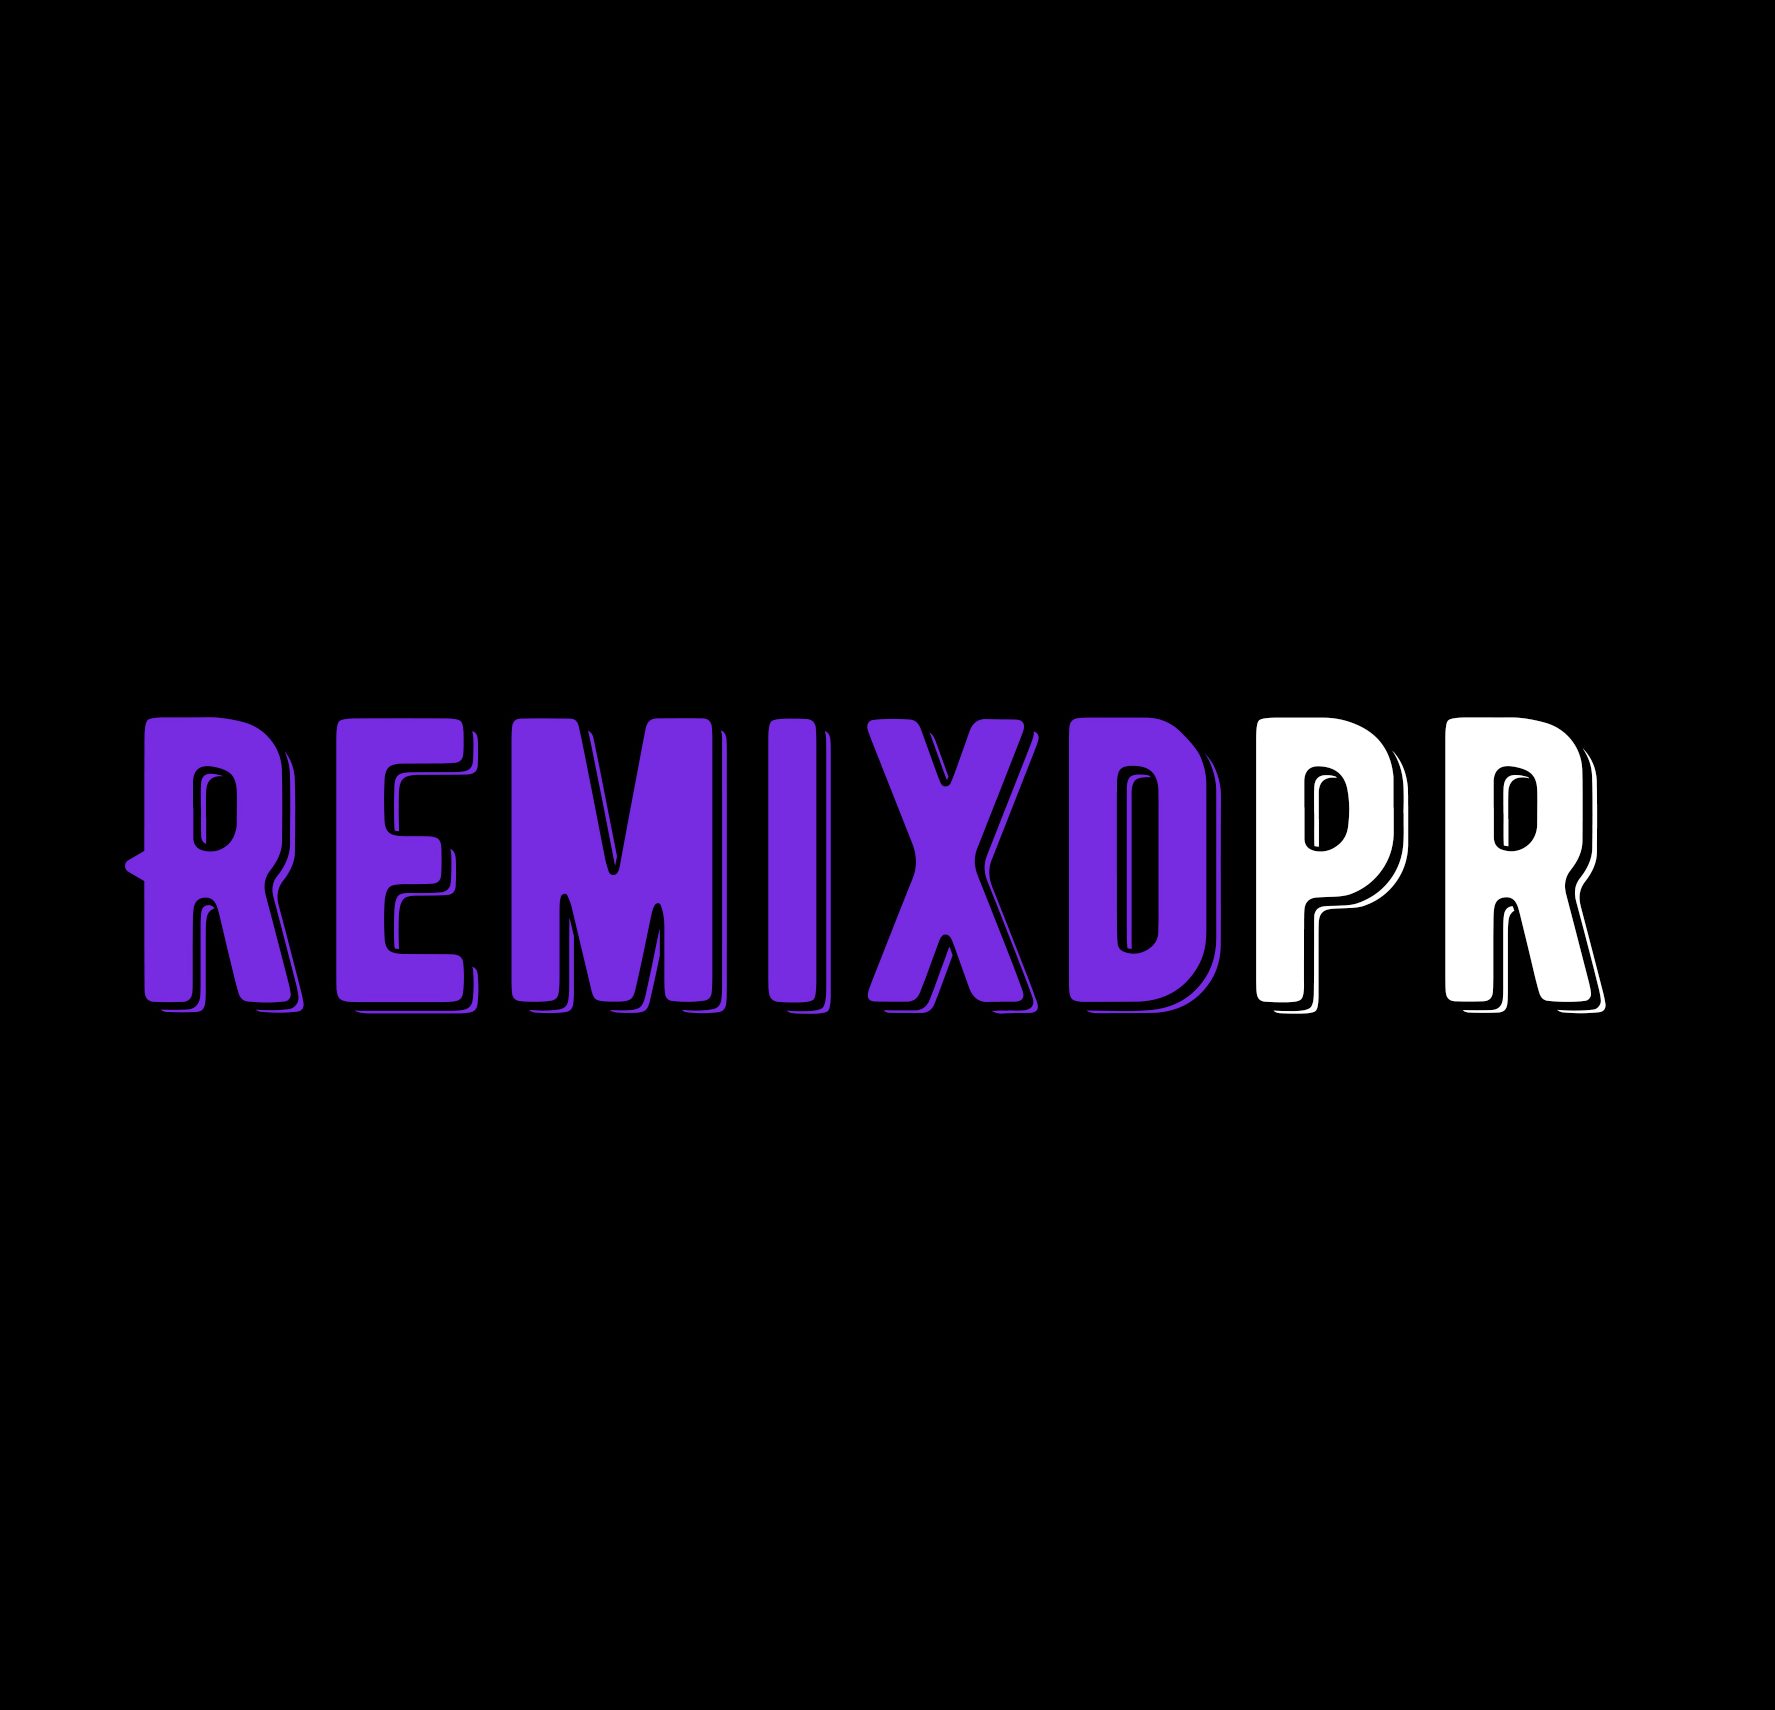 RemixdPR